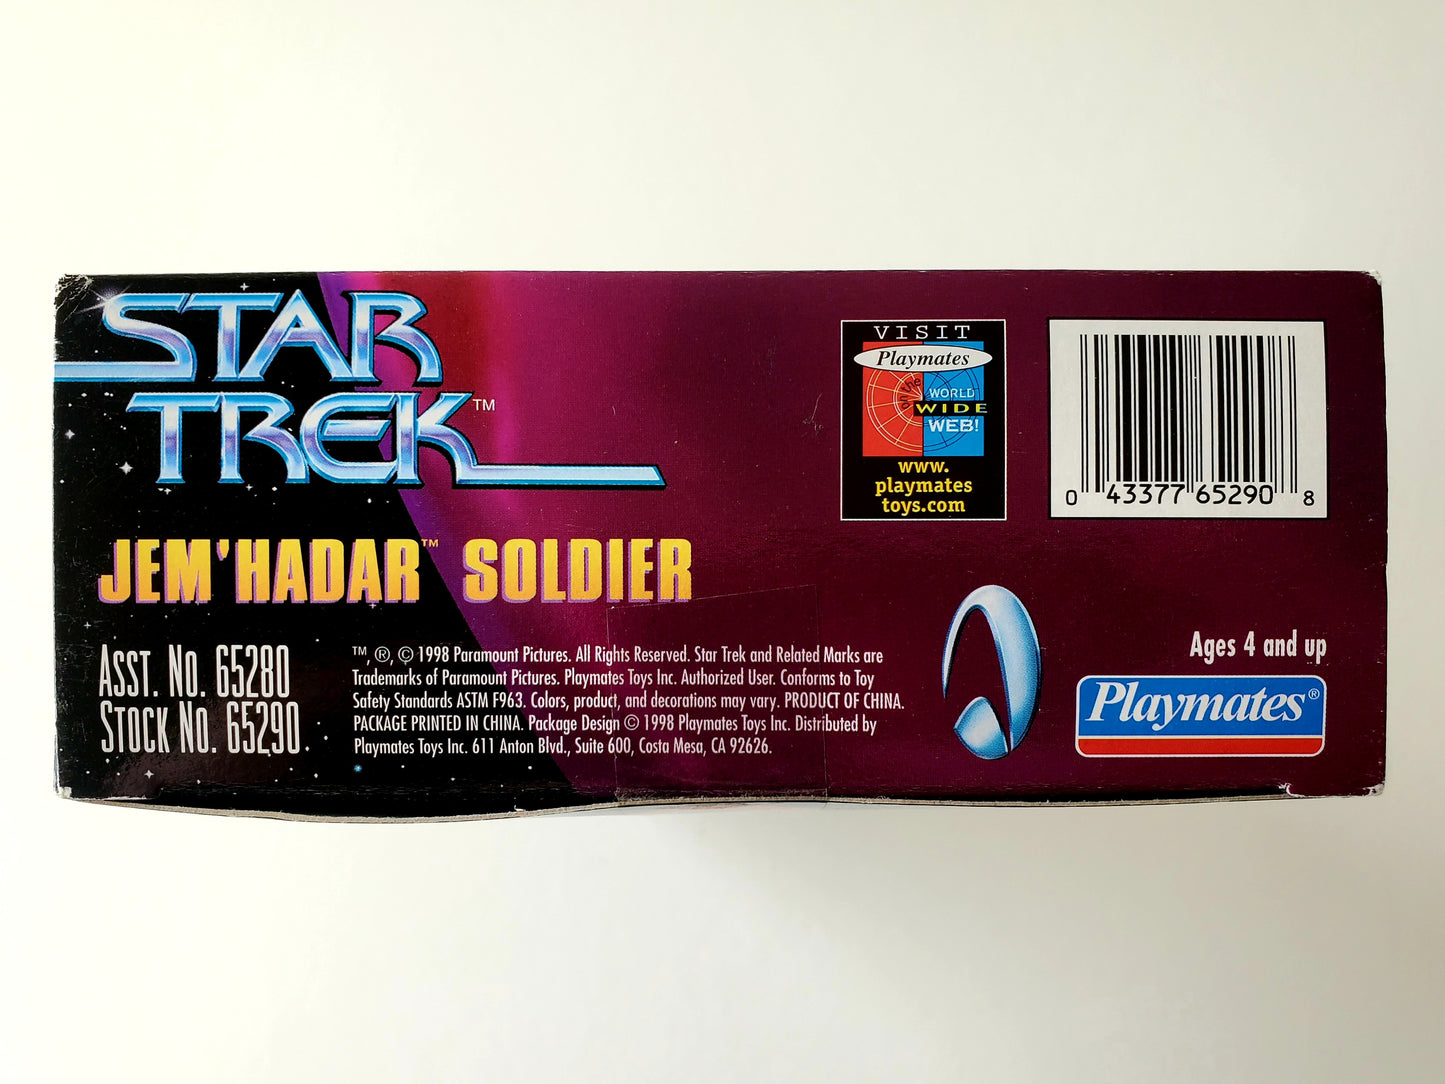 Warp Factor Series 3 Jem'Hadar Soldier from Star Trek